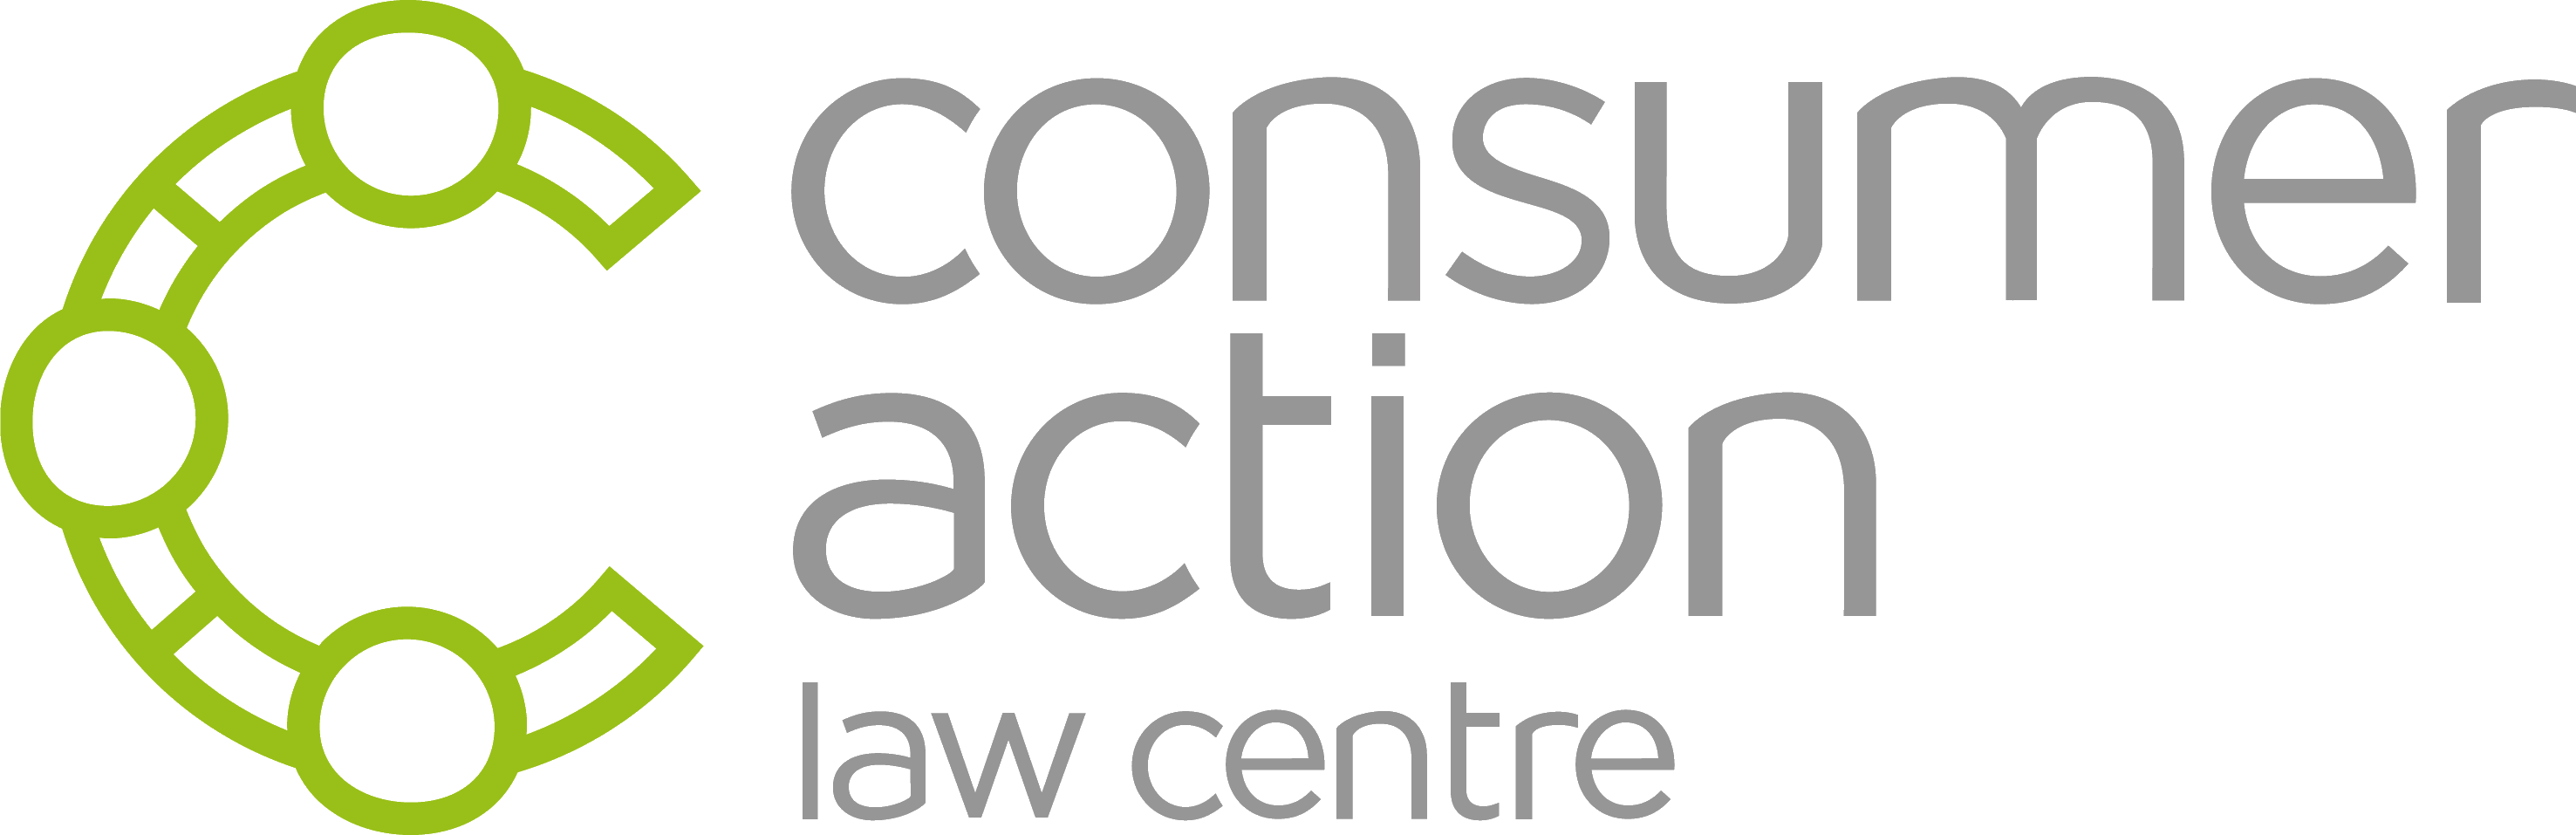 ConsumerActionLawCentre logo2